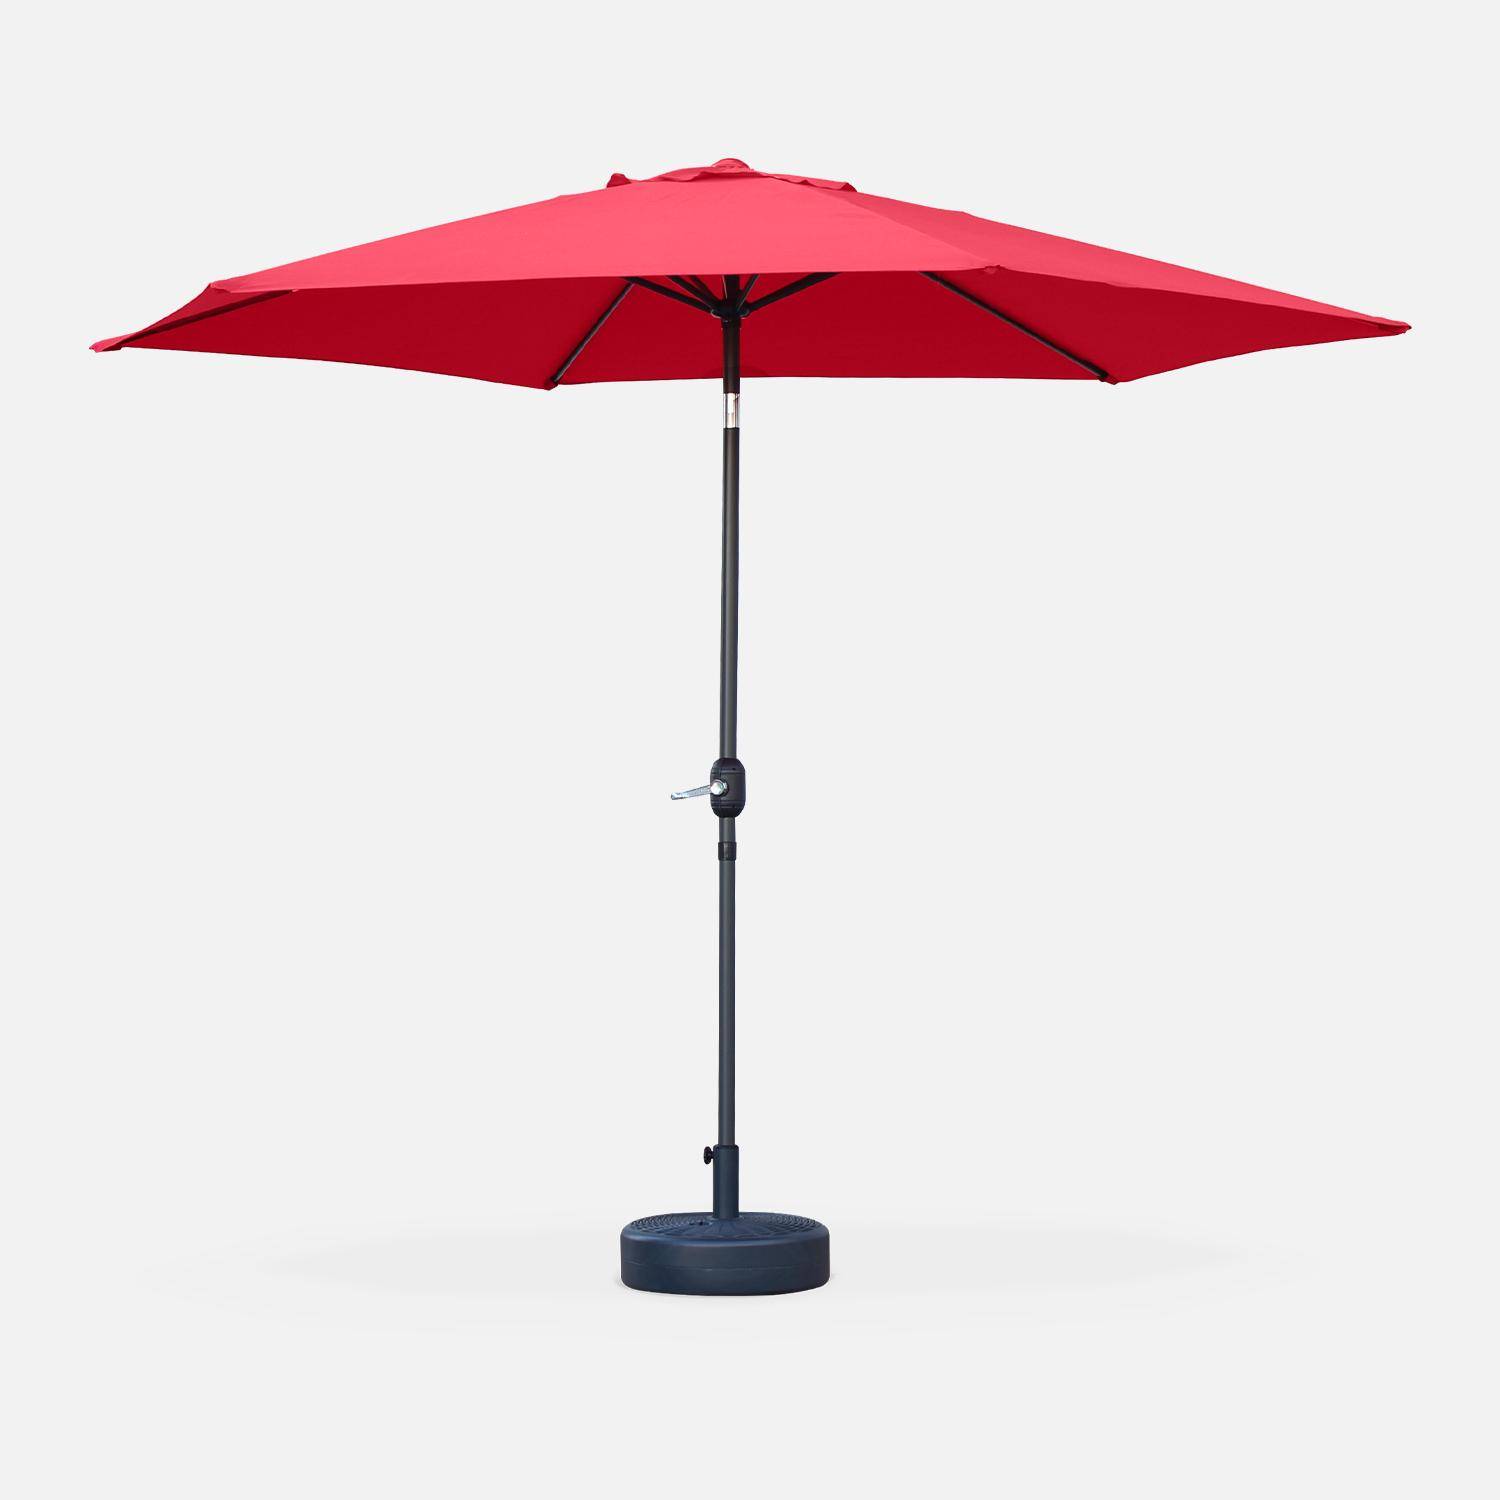 Sombrilla jardin, parasol rojo, mástil central, inclinable, redondo, Ø300cm, Touquet,sweeek,Photo3